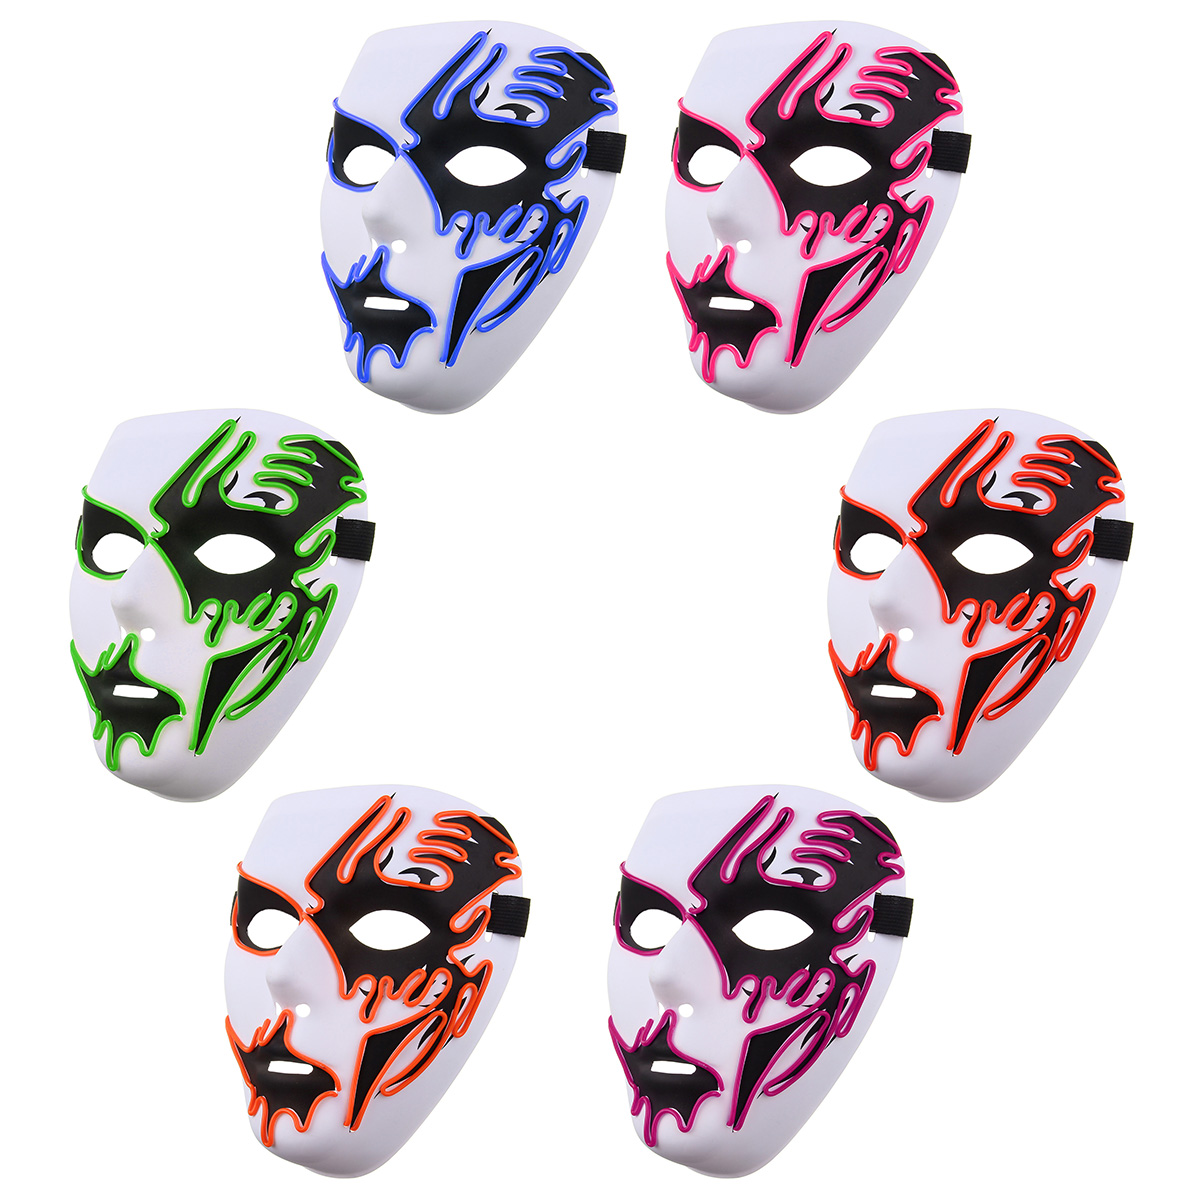 Halloween-Mask-LED-Luminous-Flashing-Party-Masks-Light-Up-Dance-Halloween-Cosplay-Props-1323531-3